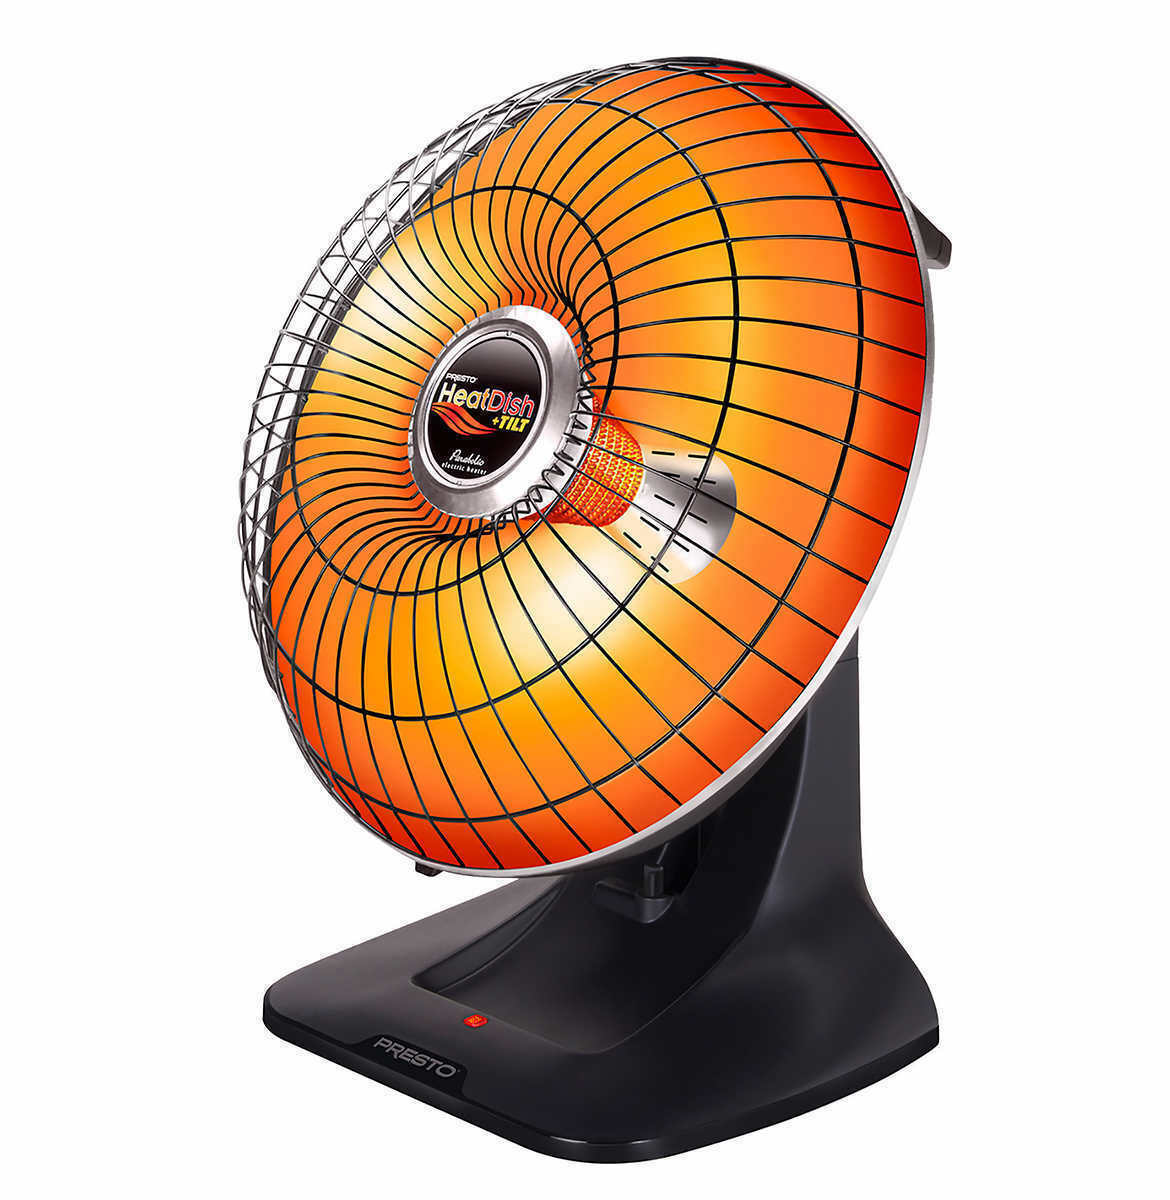 ✳️🔥 Presto Heat Dish Plus Parabolic Electric Heater 1000W 120V Brand NEW 🔥✳️